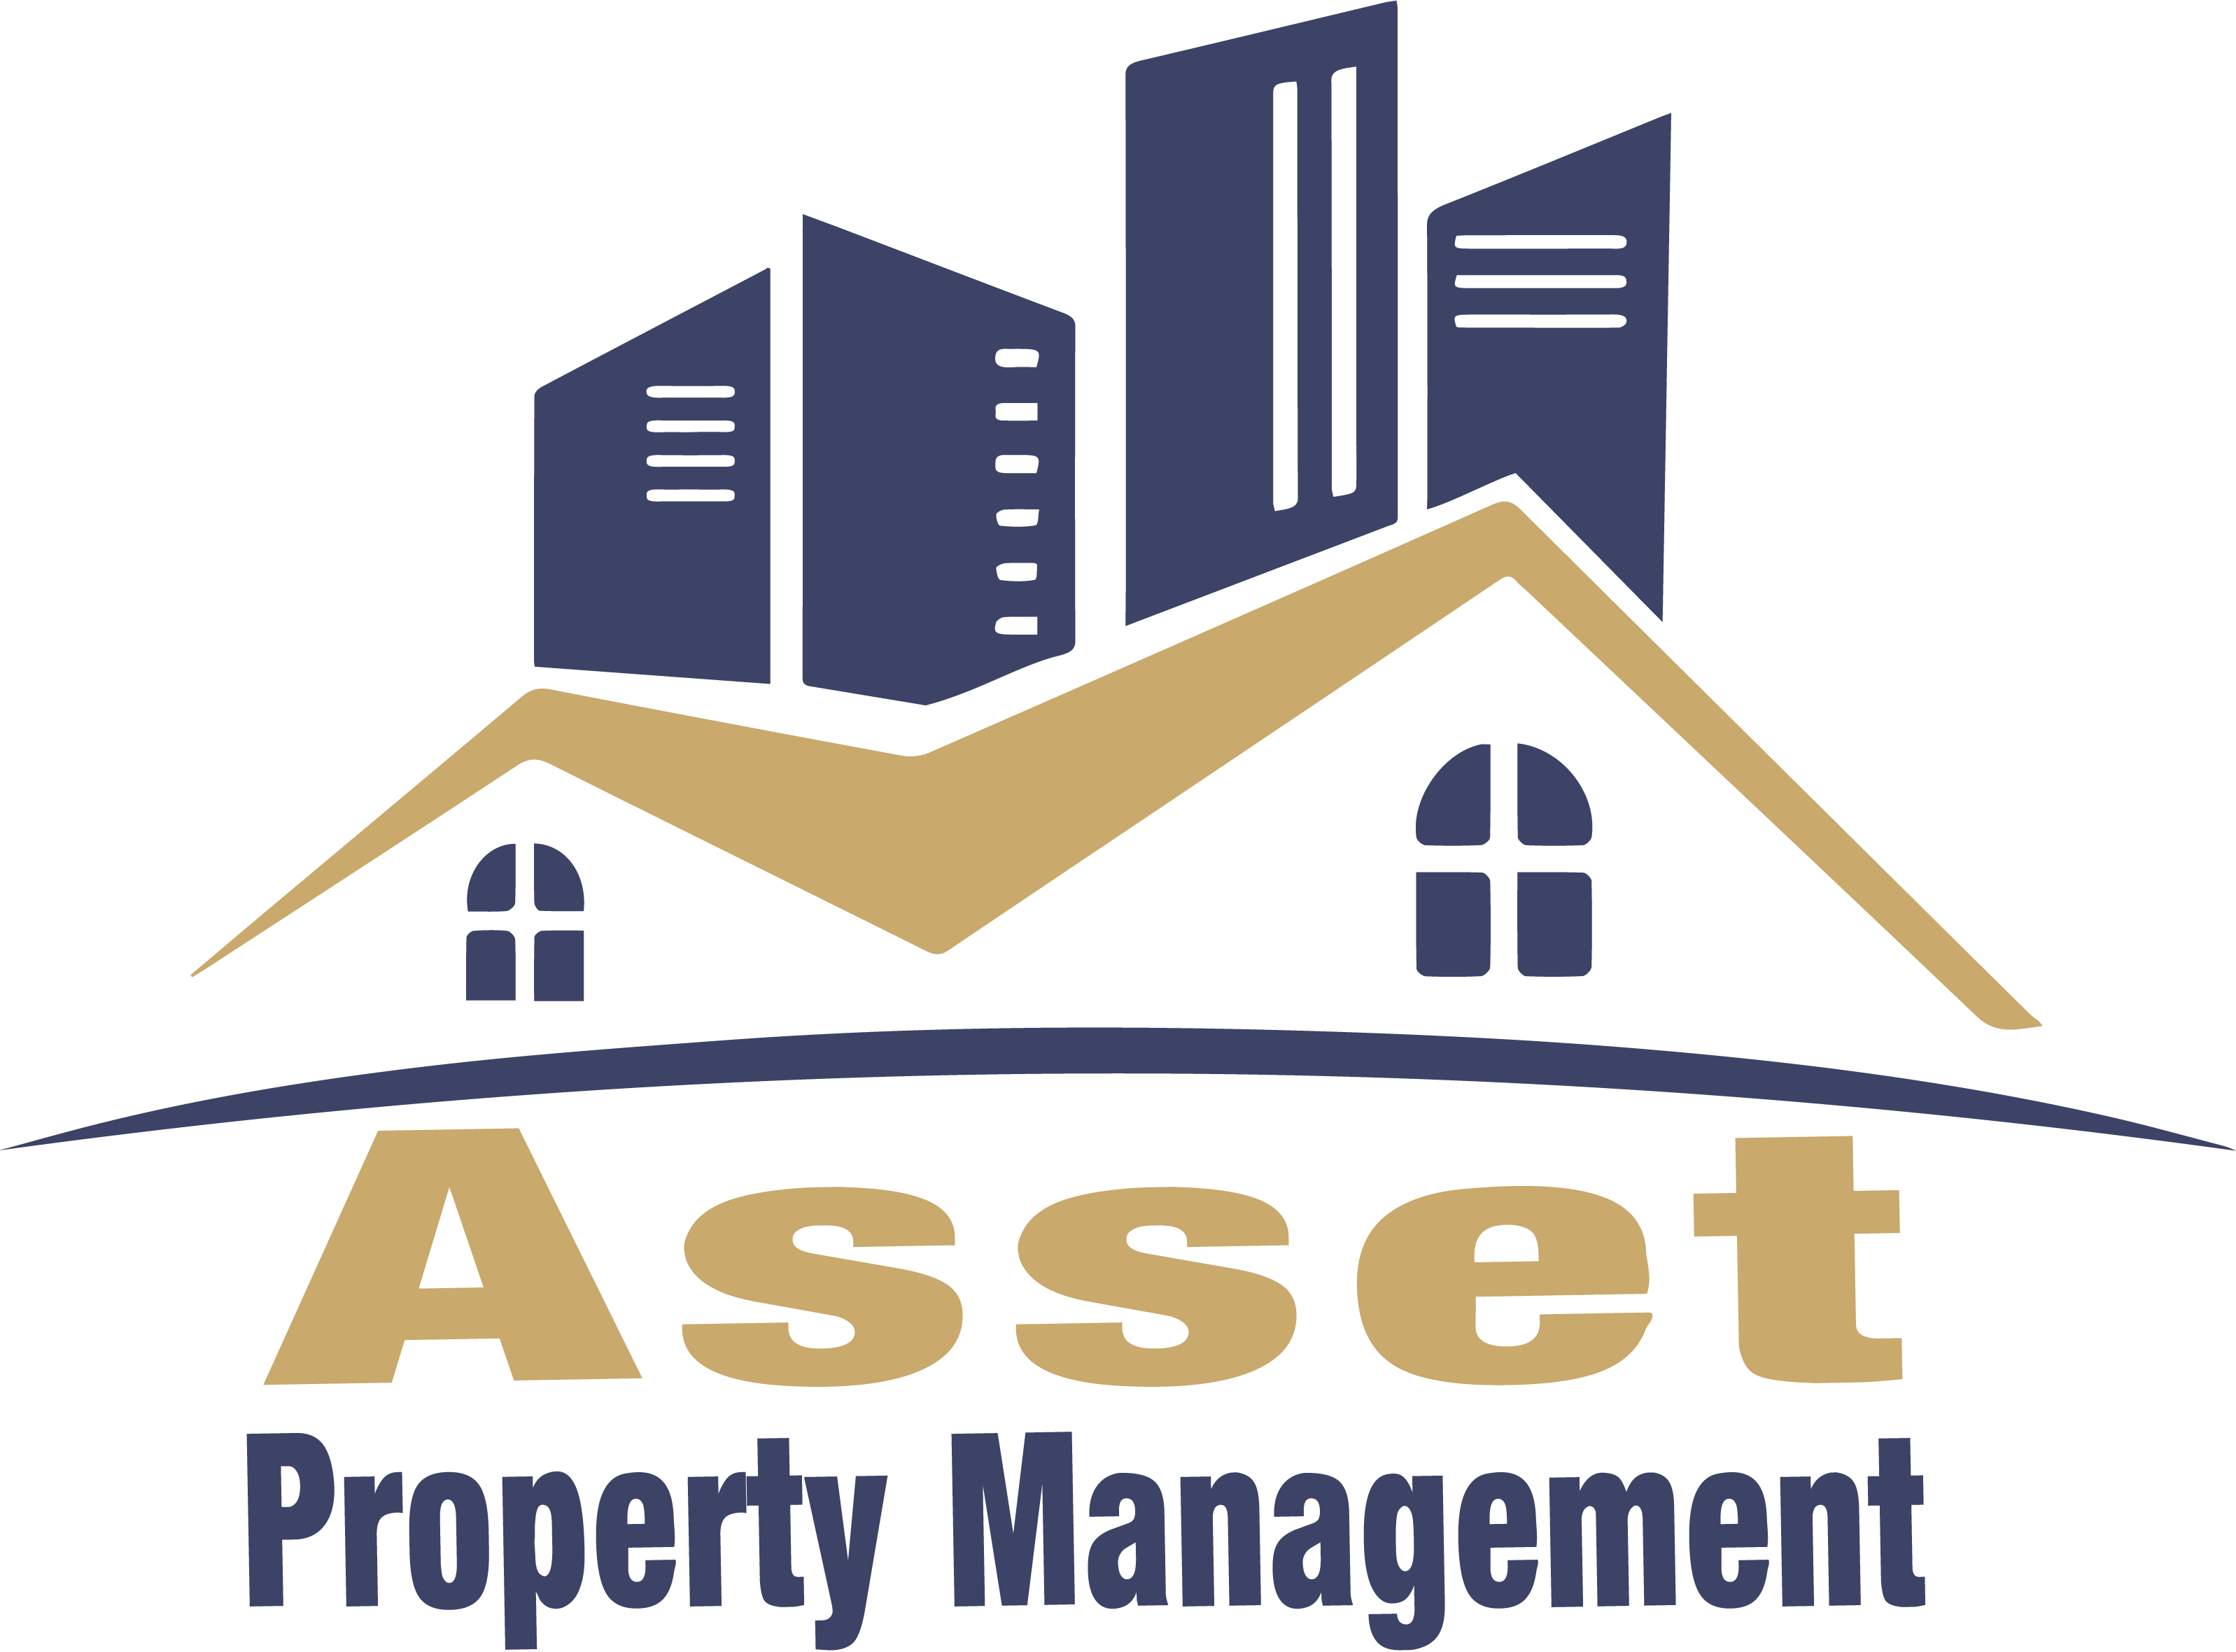 Asset Property Management